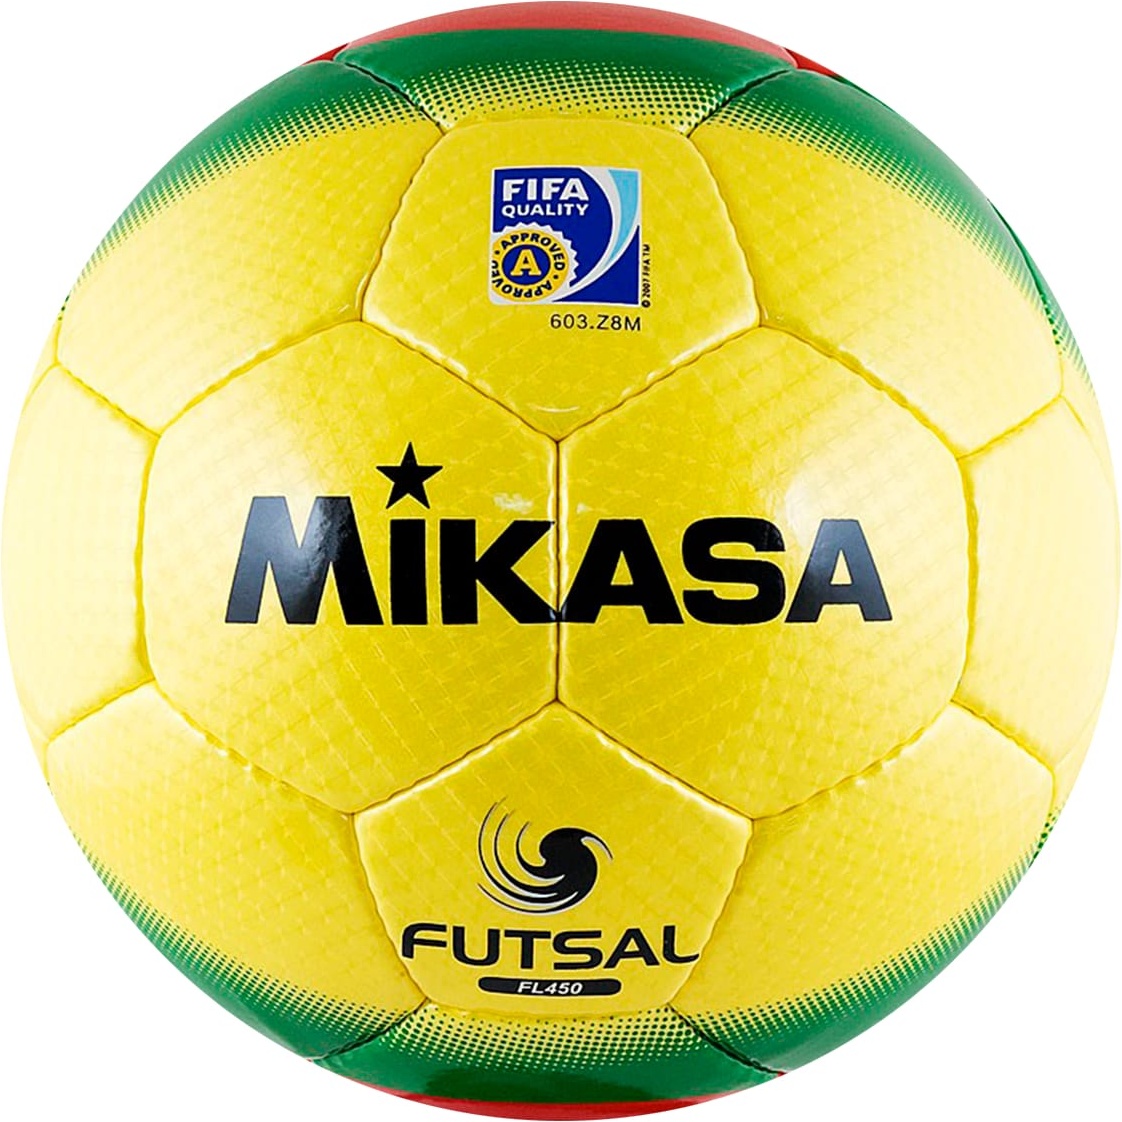 фото Футзальный мяч mikasa fl-450 №4 yellow